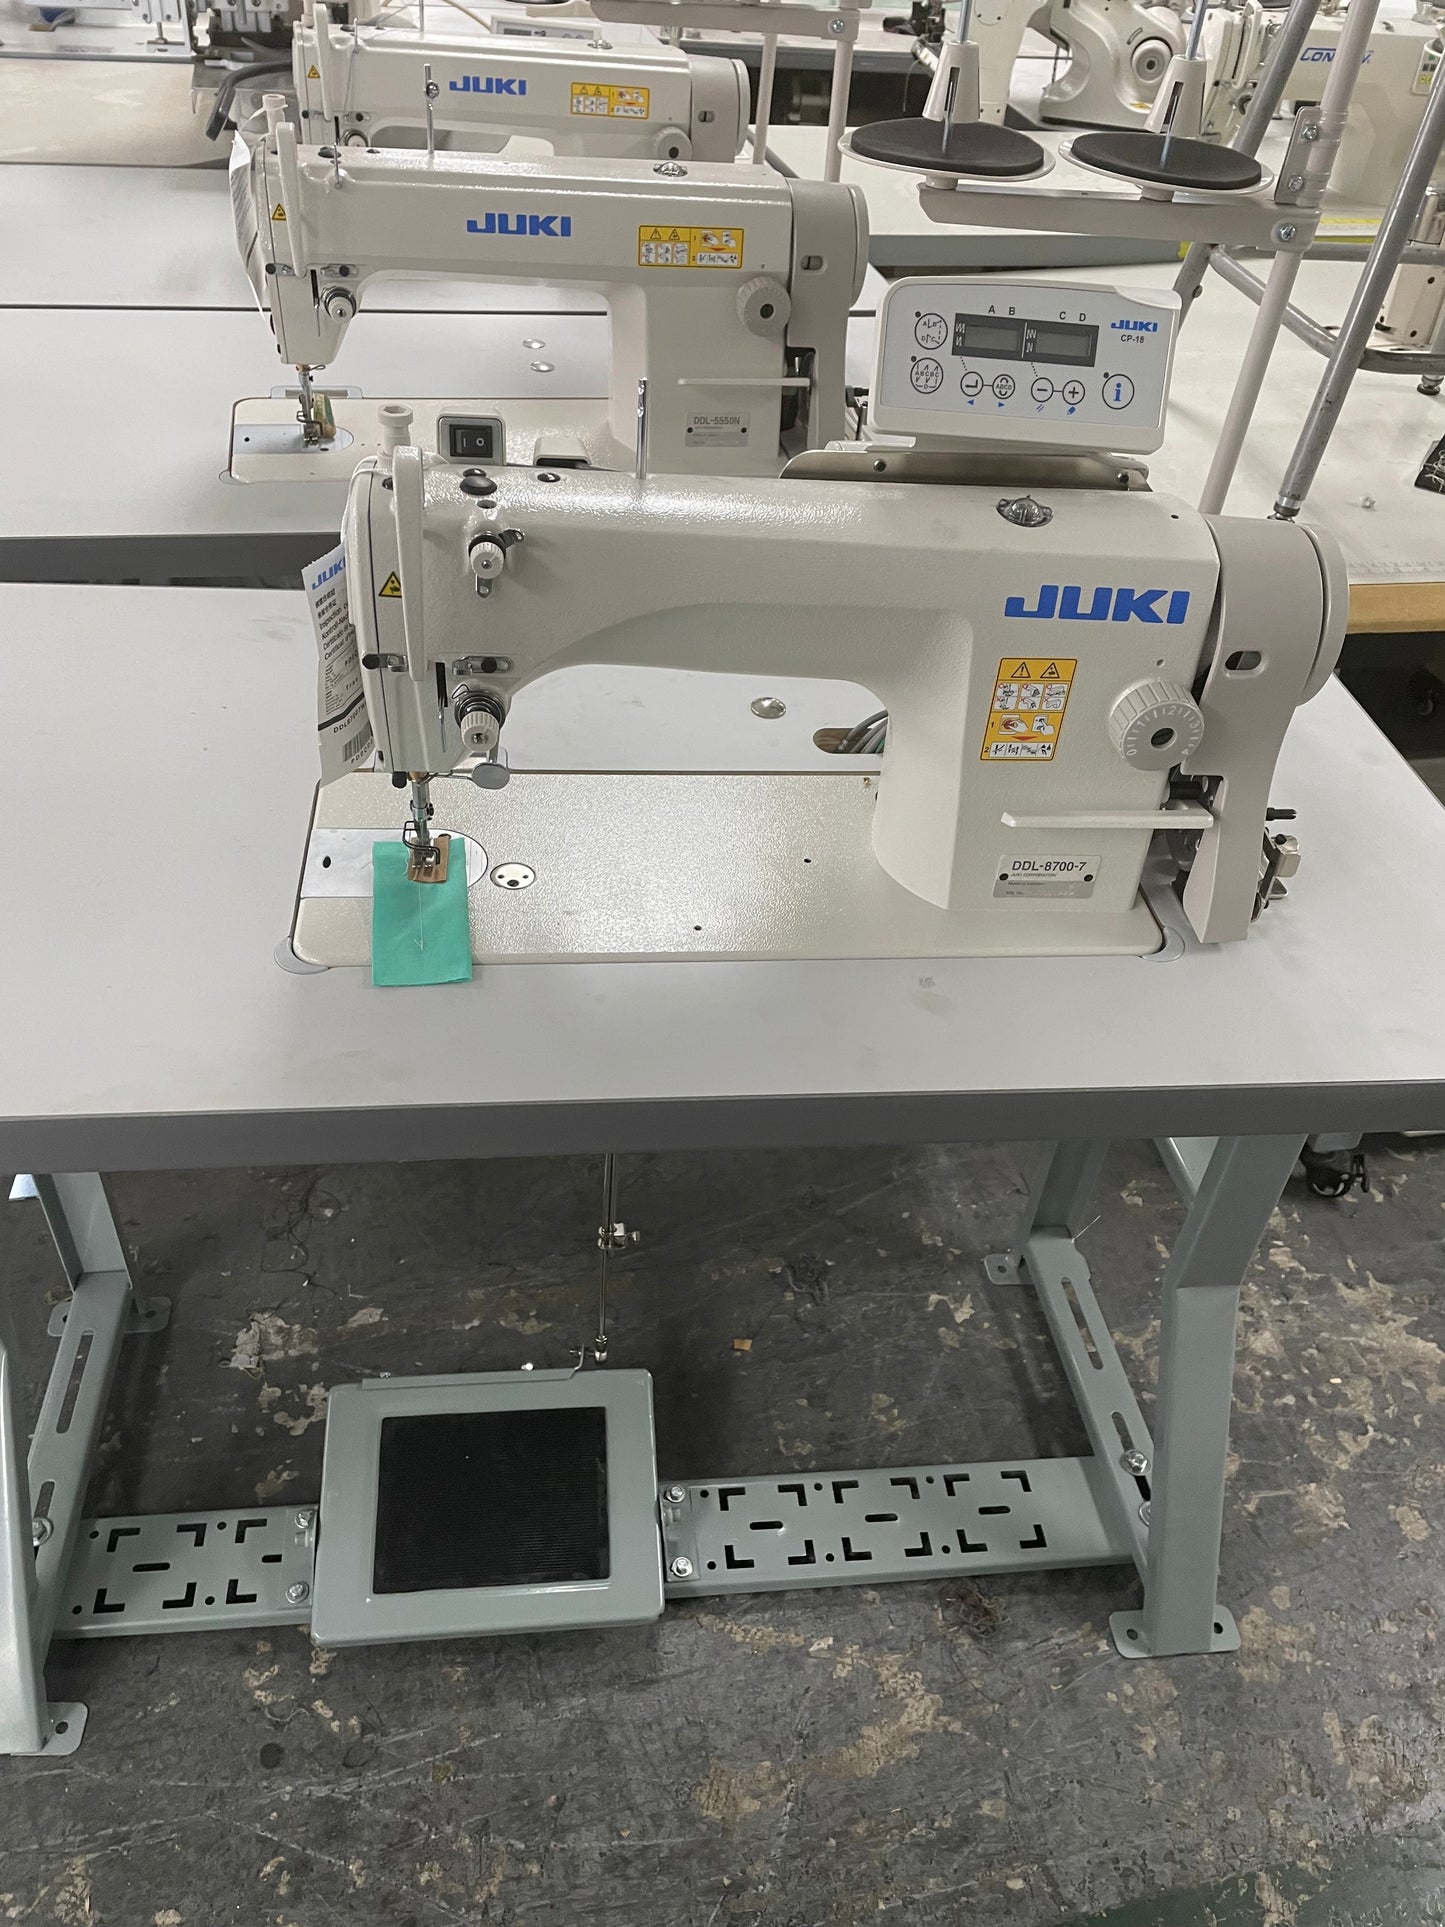 JUKI  DDL 8700-7 Single Needle Drop Feed Automatic Industrial